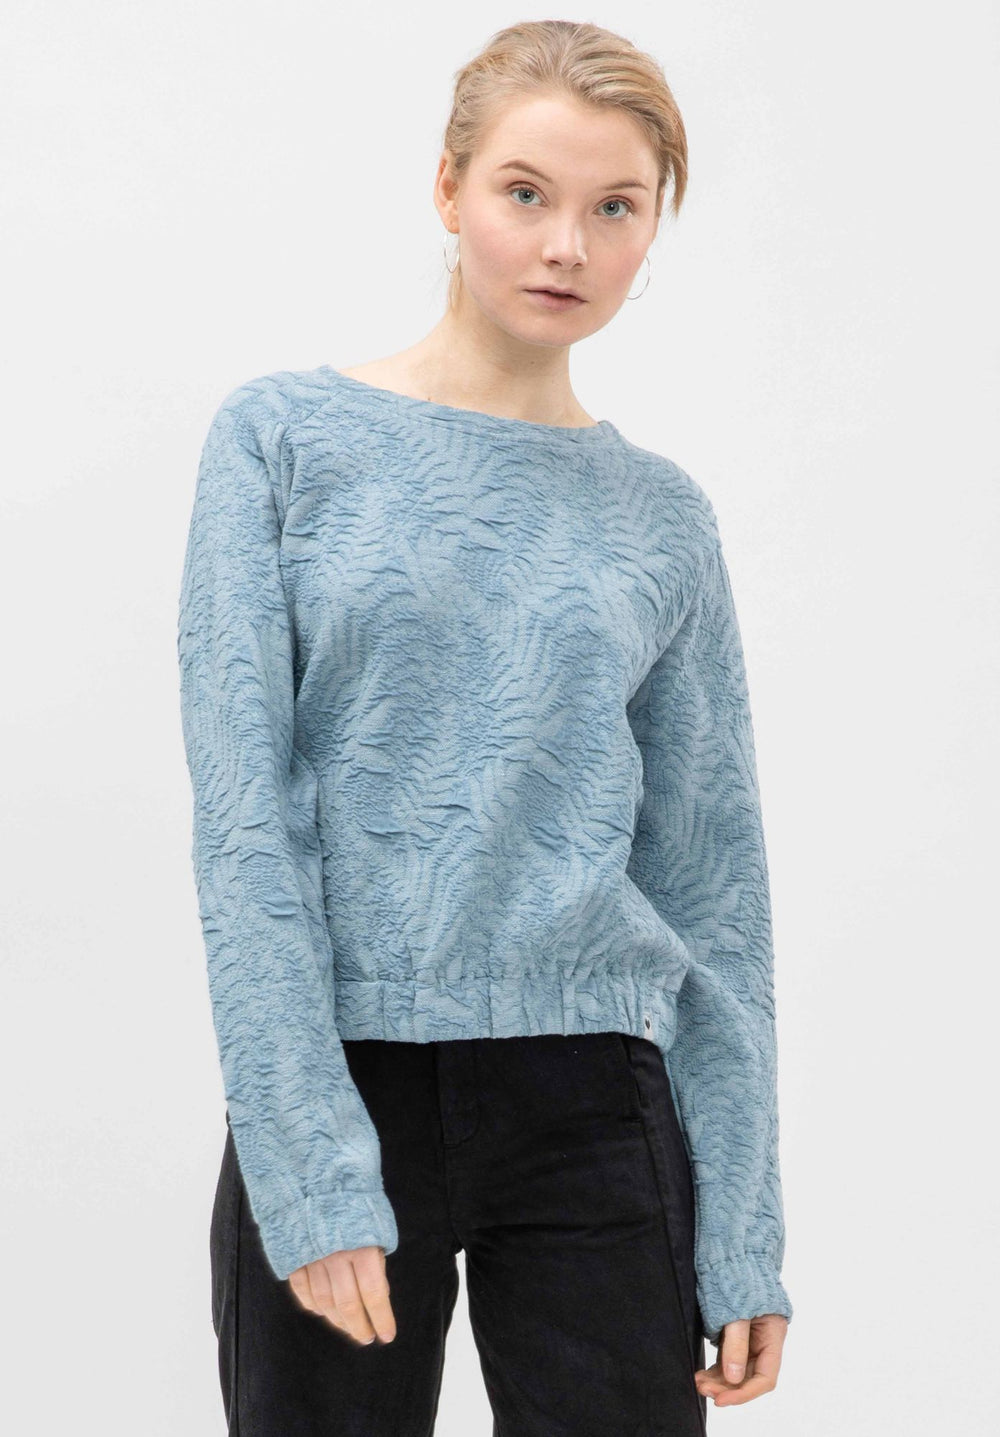 Sweater Orivesi - schwarz, vintage blue